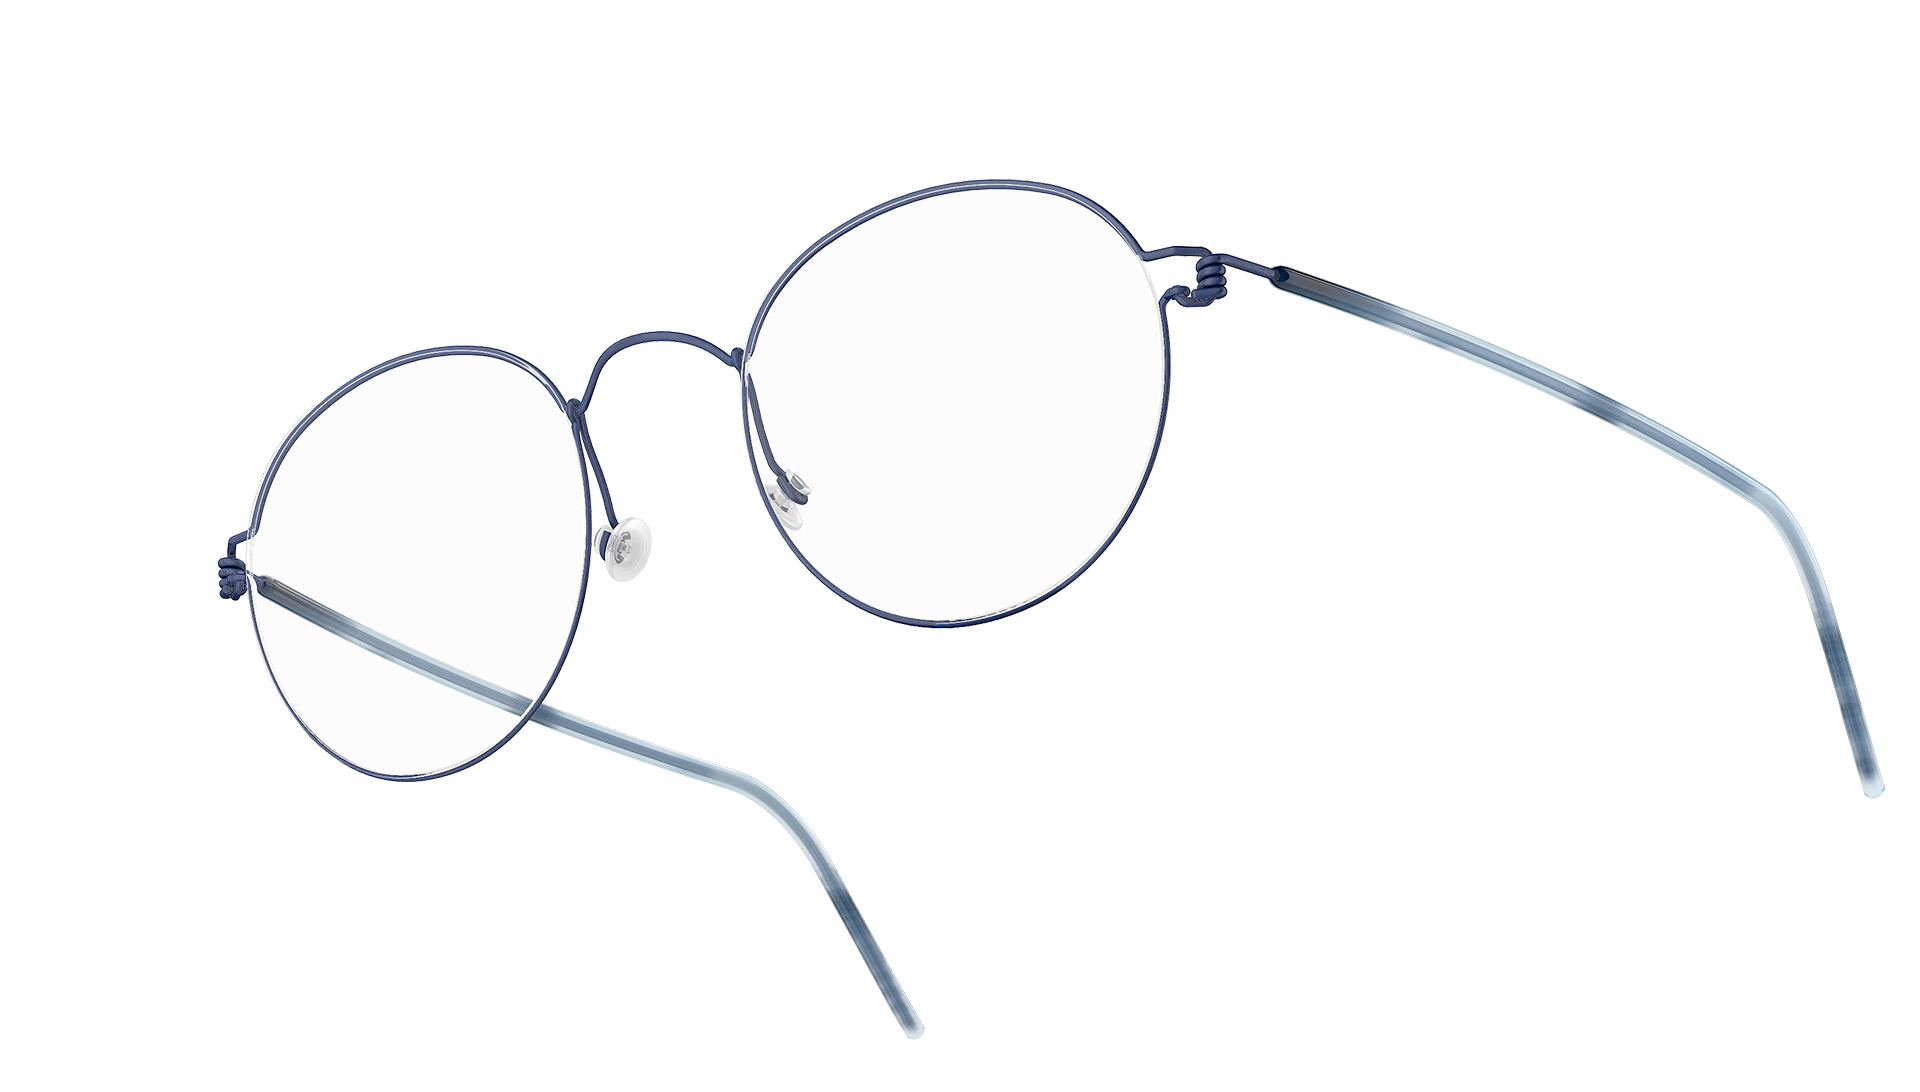 LINDBERG air titanium rim – durable wire frame glasses